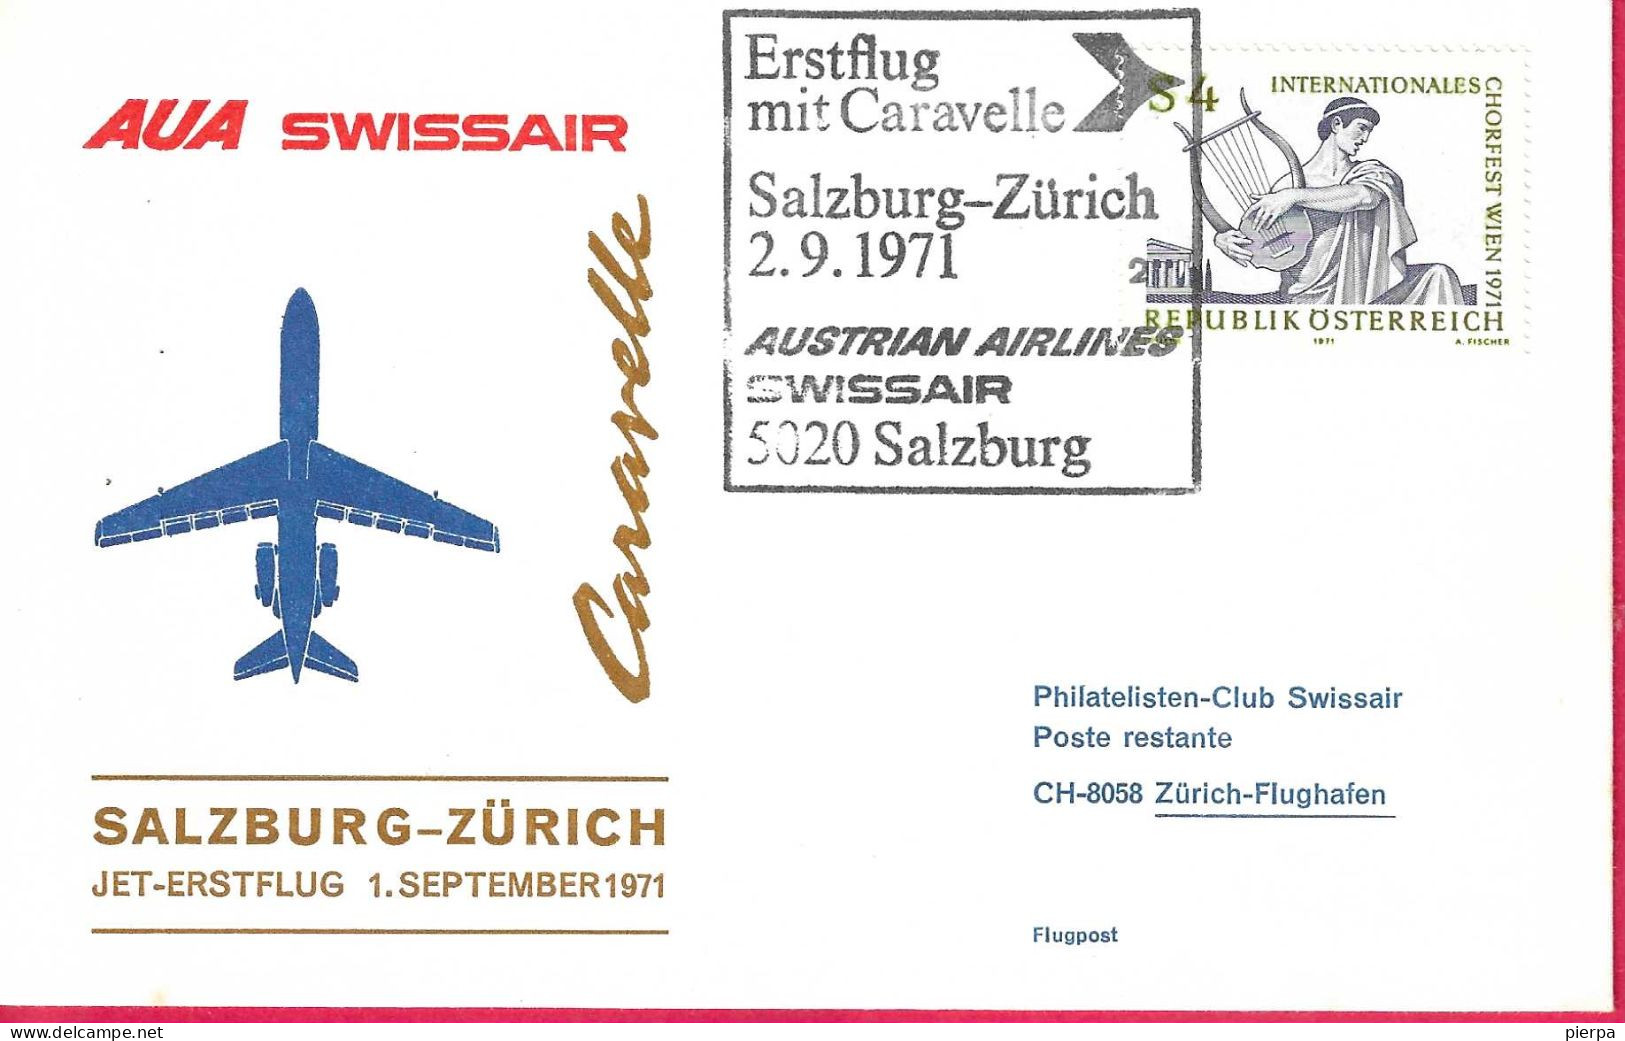 AUSTRIA - ERSTFLUG AUA/SWISSAIR  MIT  CARAVELLE - FROM SALZBURG TO ZURICH *2.9.1971* ON OFFICIAL COVER - First Flight Covers